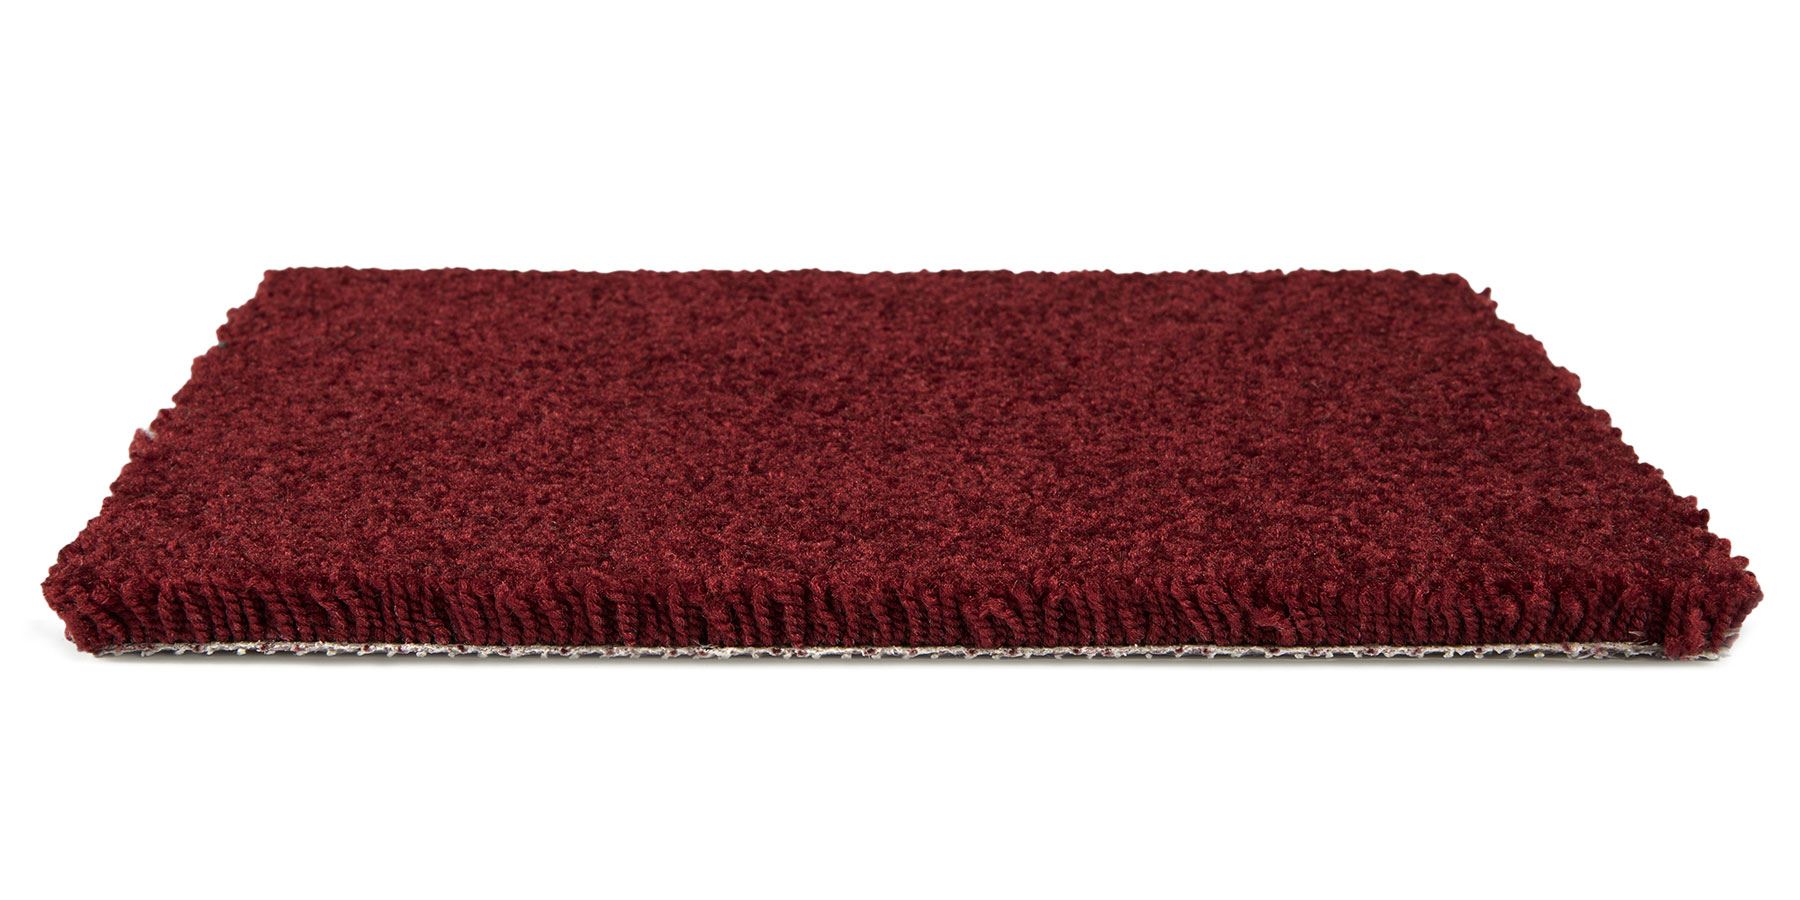 Fundamental Spiced Berry Carpet